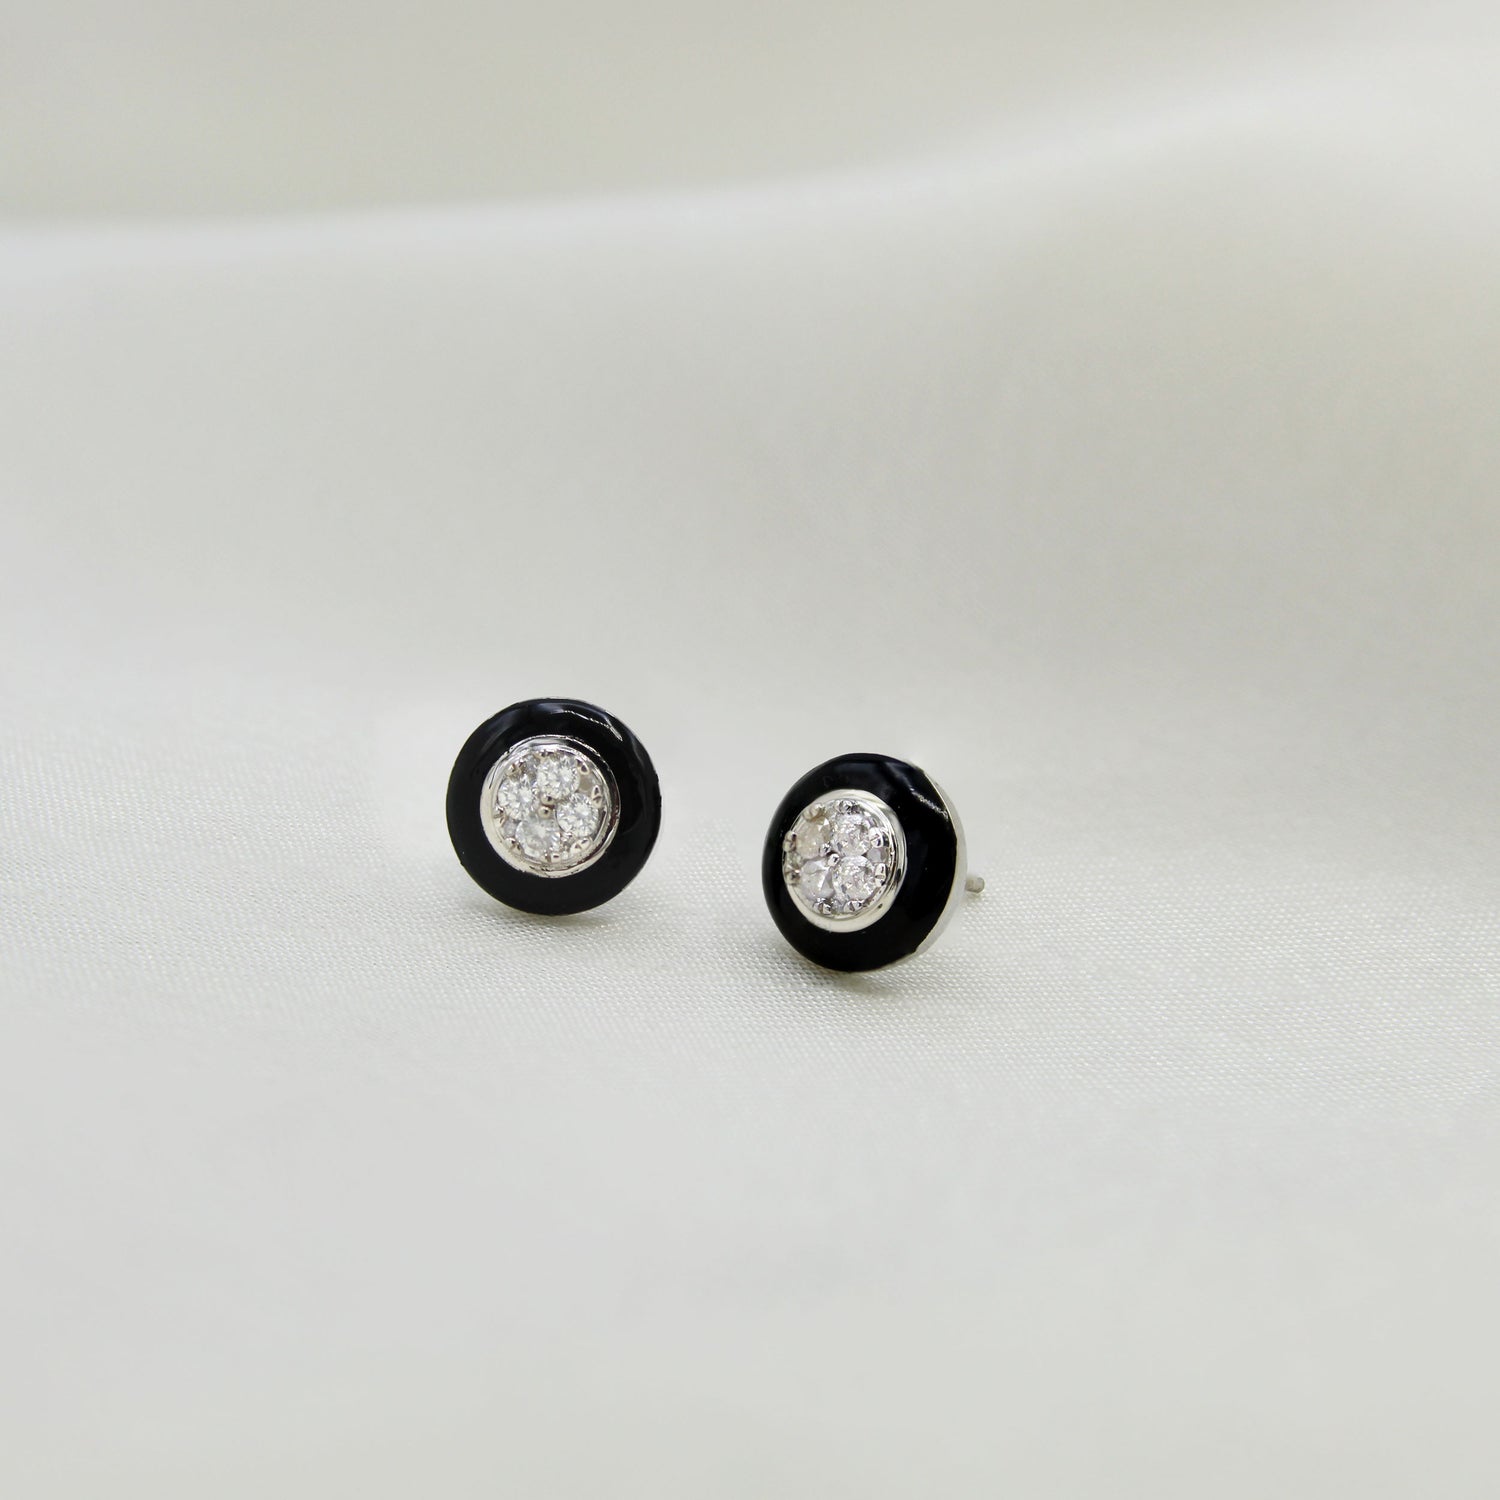 Black Enamel 1/4Ctw to 1/2 Ctw (I2-I3) Natural Diamond Stud Earrings set in 925 Sterling Silver petal flower